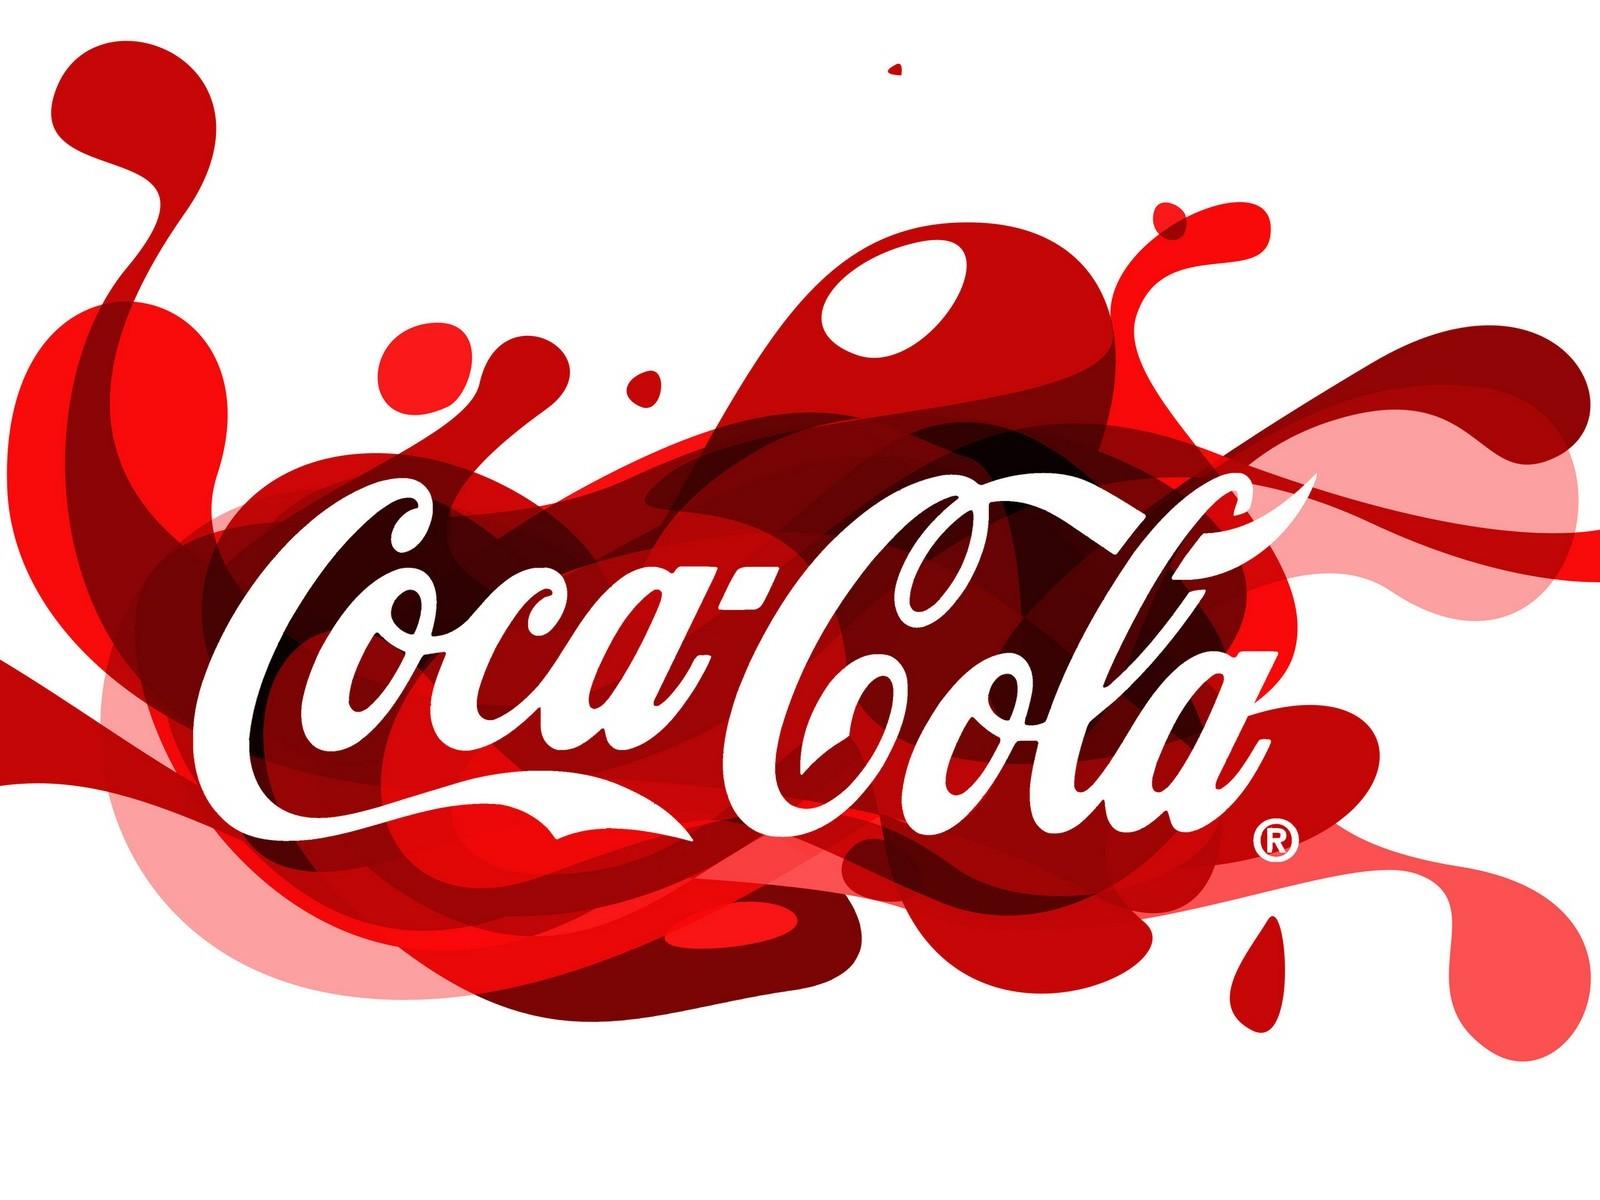 Coca cola artwork